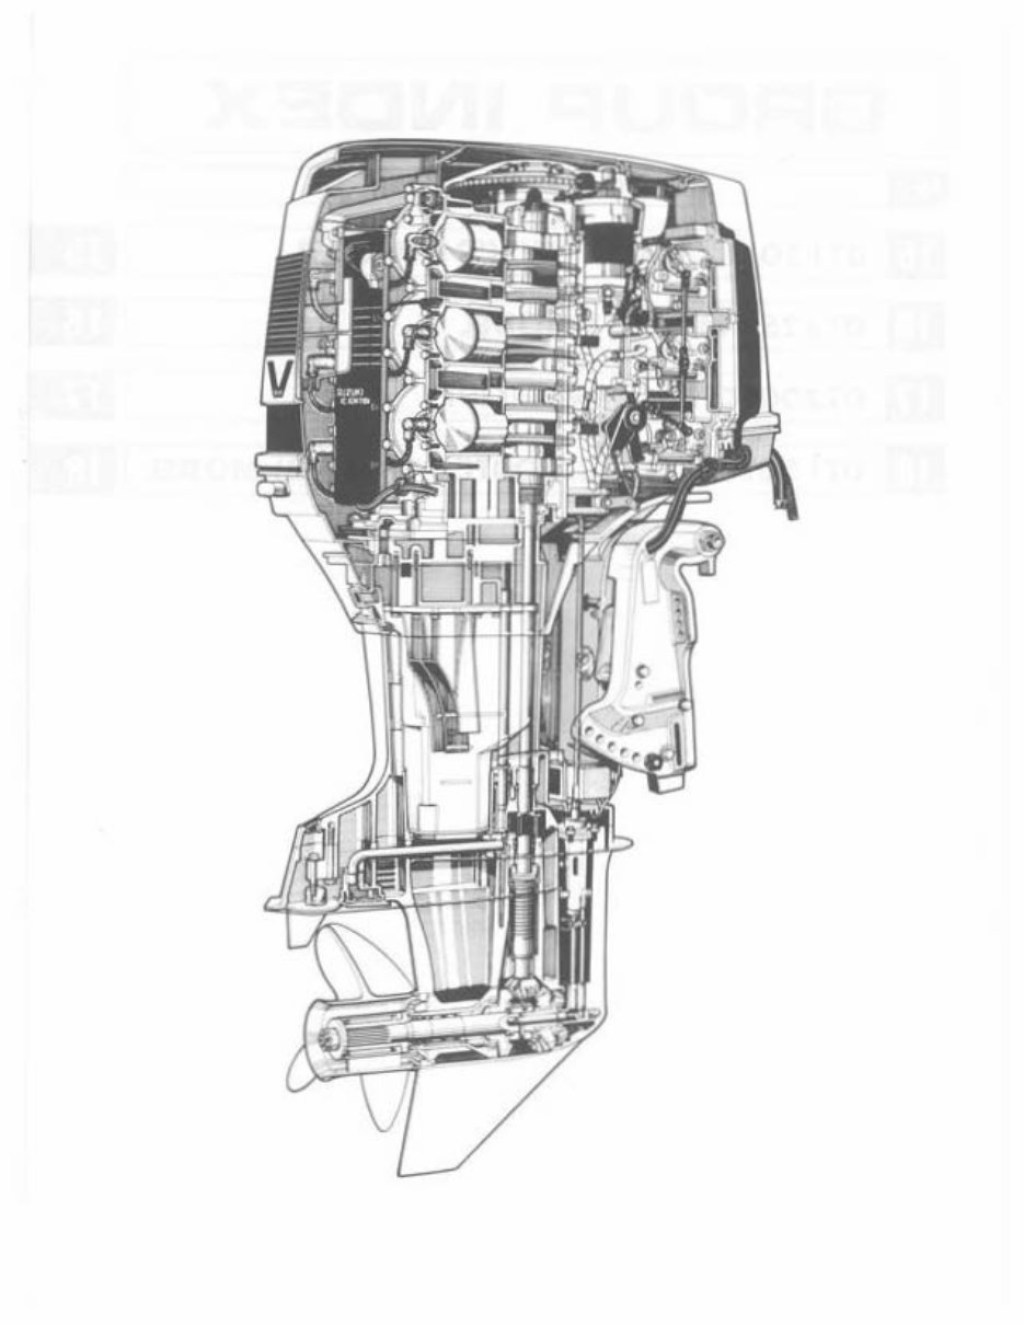 suzuki dt 200 owners manual - Suzuki DT EFI -0 Workshop Service Repair Manual